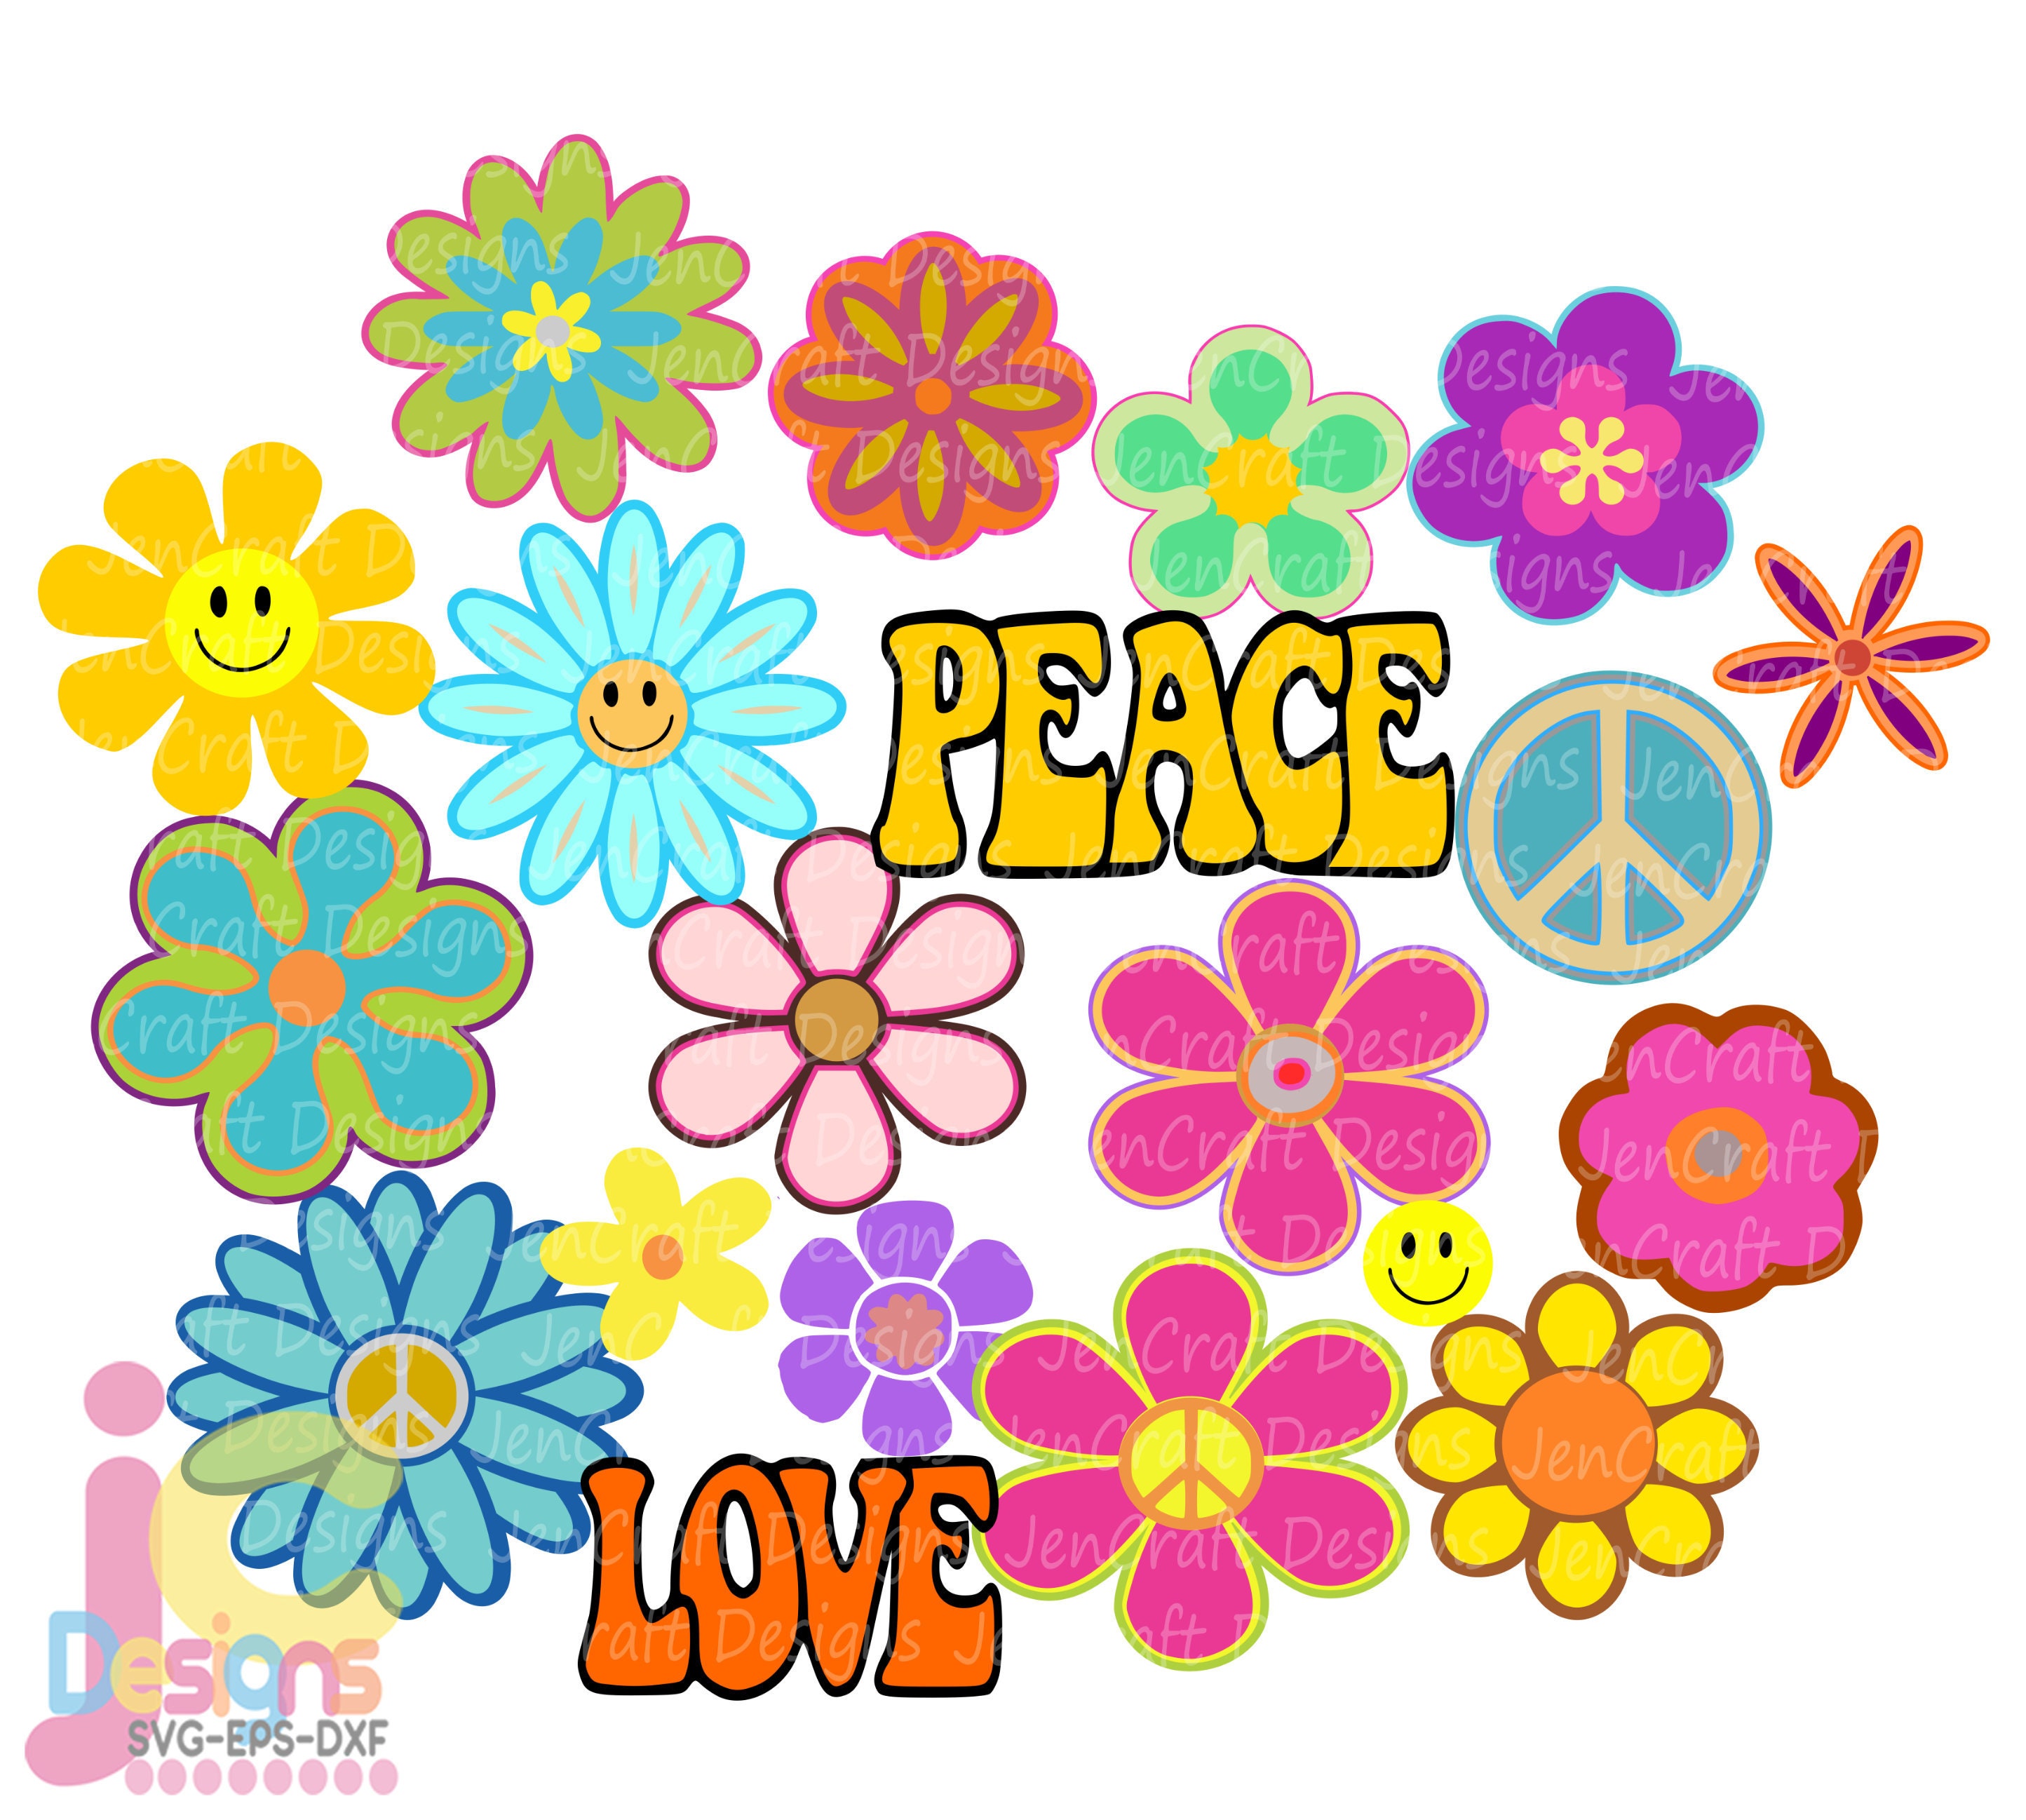 Hippie Svg, Groovy Flowers svg, 60s-70s Retro Peace Love Flower child